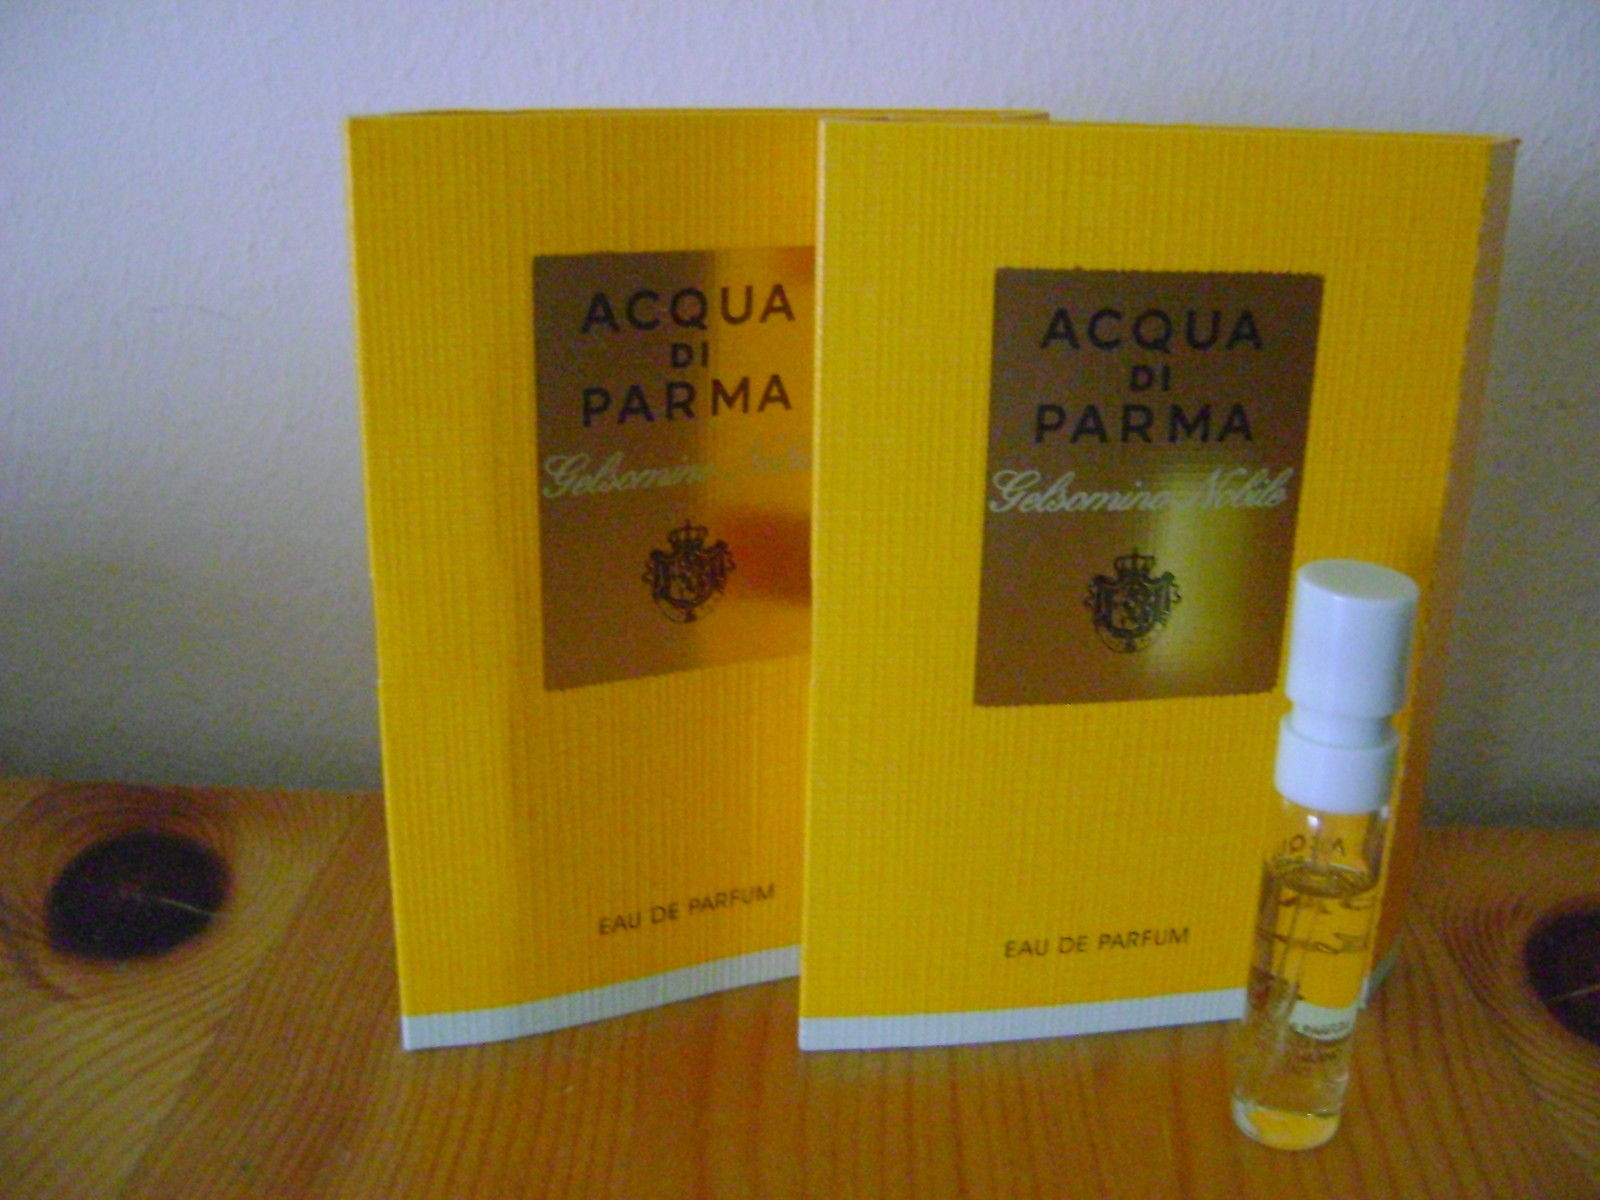 Acqua-Di-Parma-Gelsomino-Nobile-samples